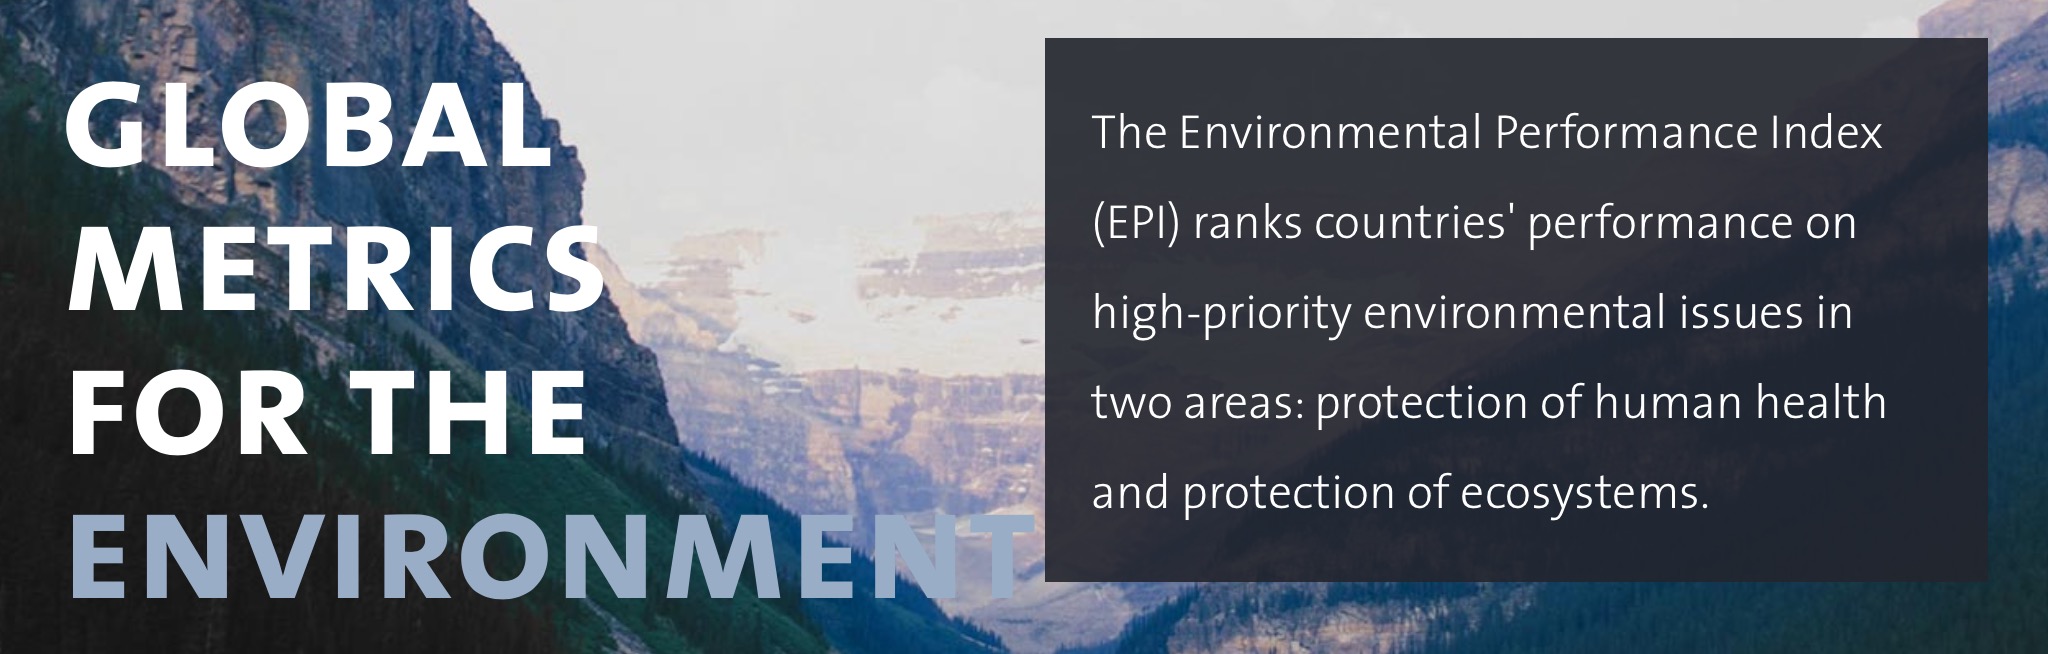 Environmental performance index